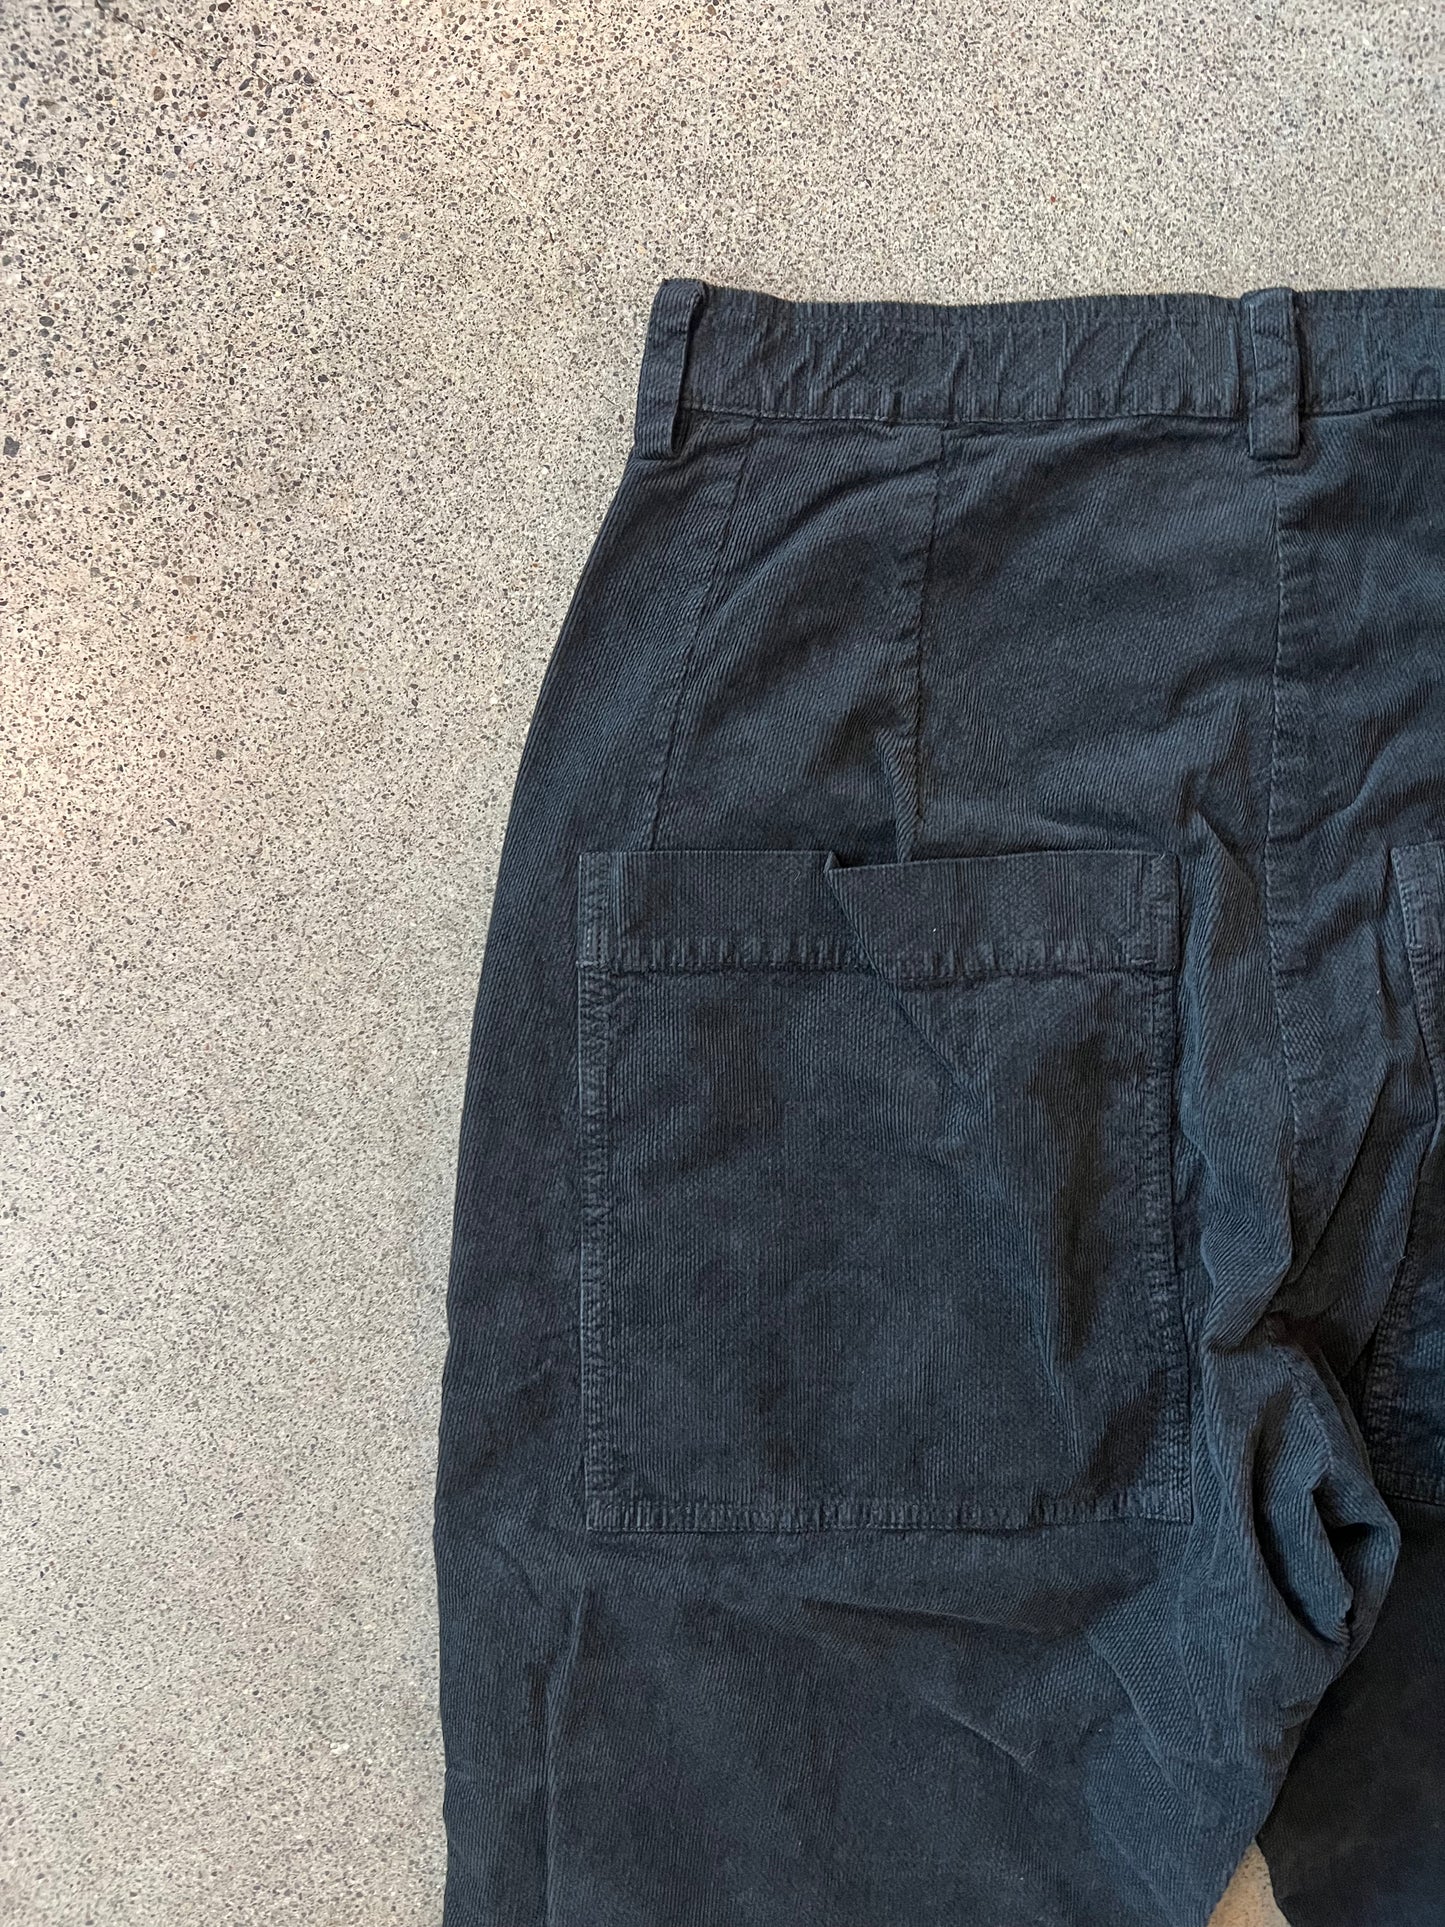 Rundholz Black Label - Micro-Corduroy Pant in Black or Bronze